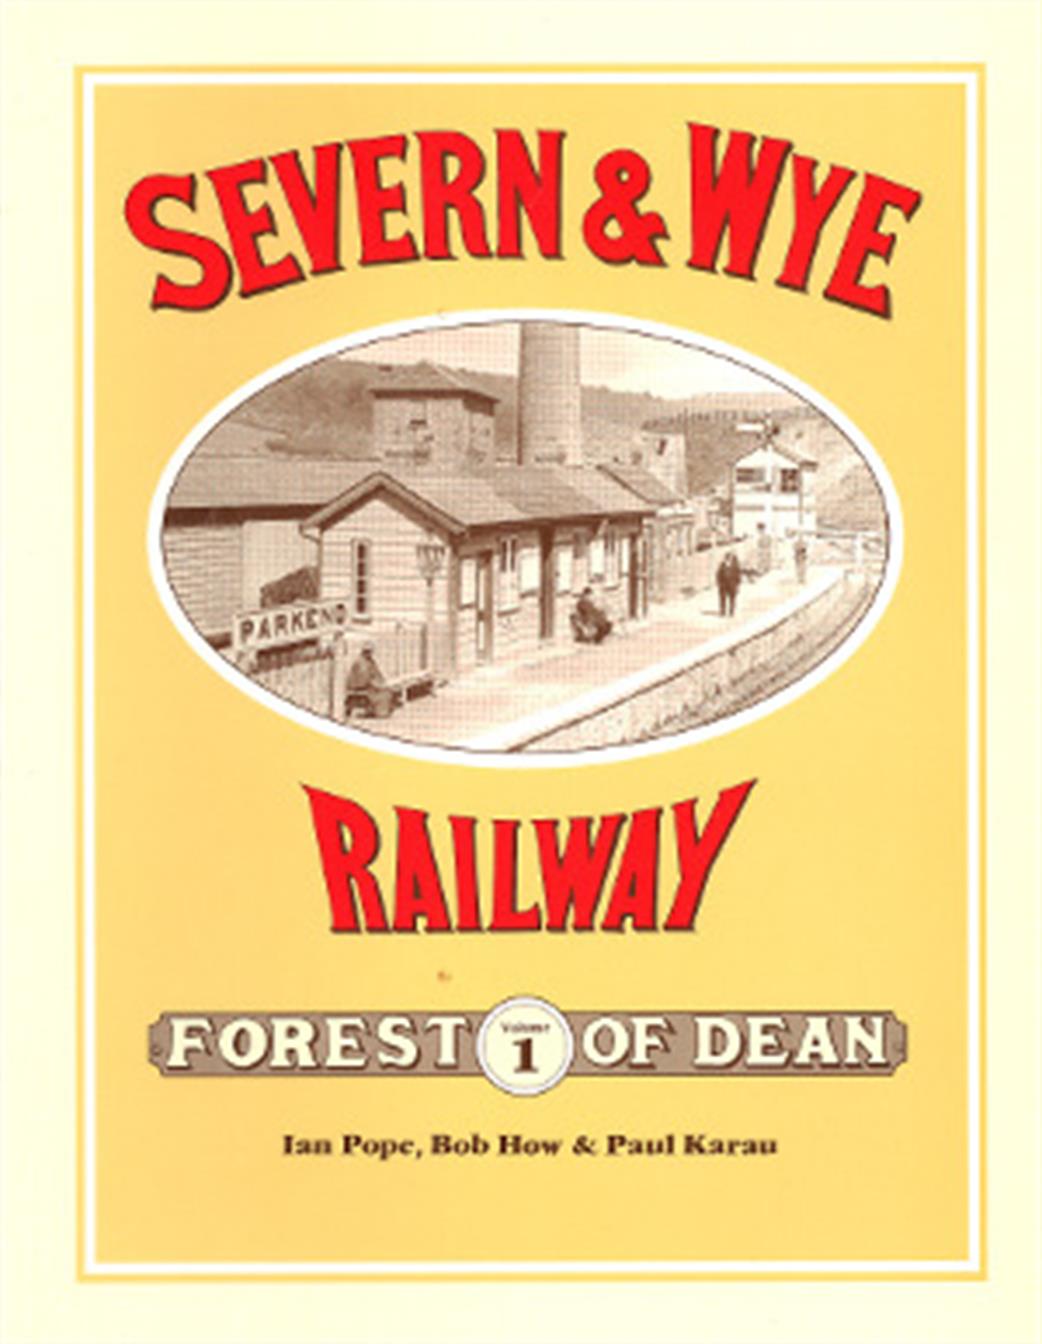 Wild Swan  SWye1 The Severn & Wye Railway Volume 1 by Ian Pope, Bob Howe & Paul Karau